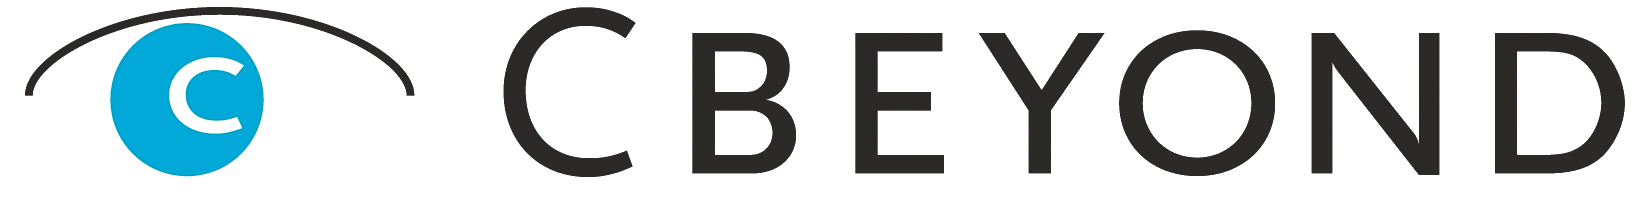 Cbeyond Brand Logo